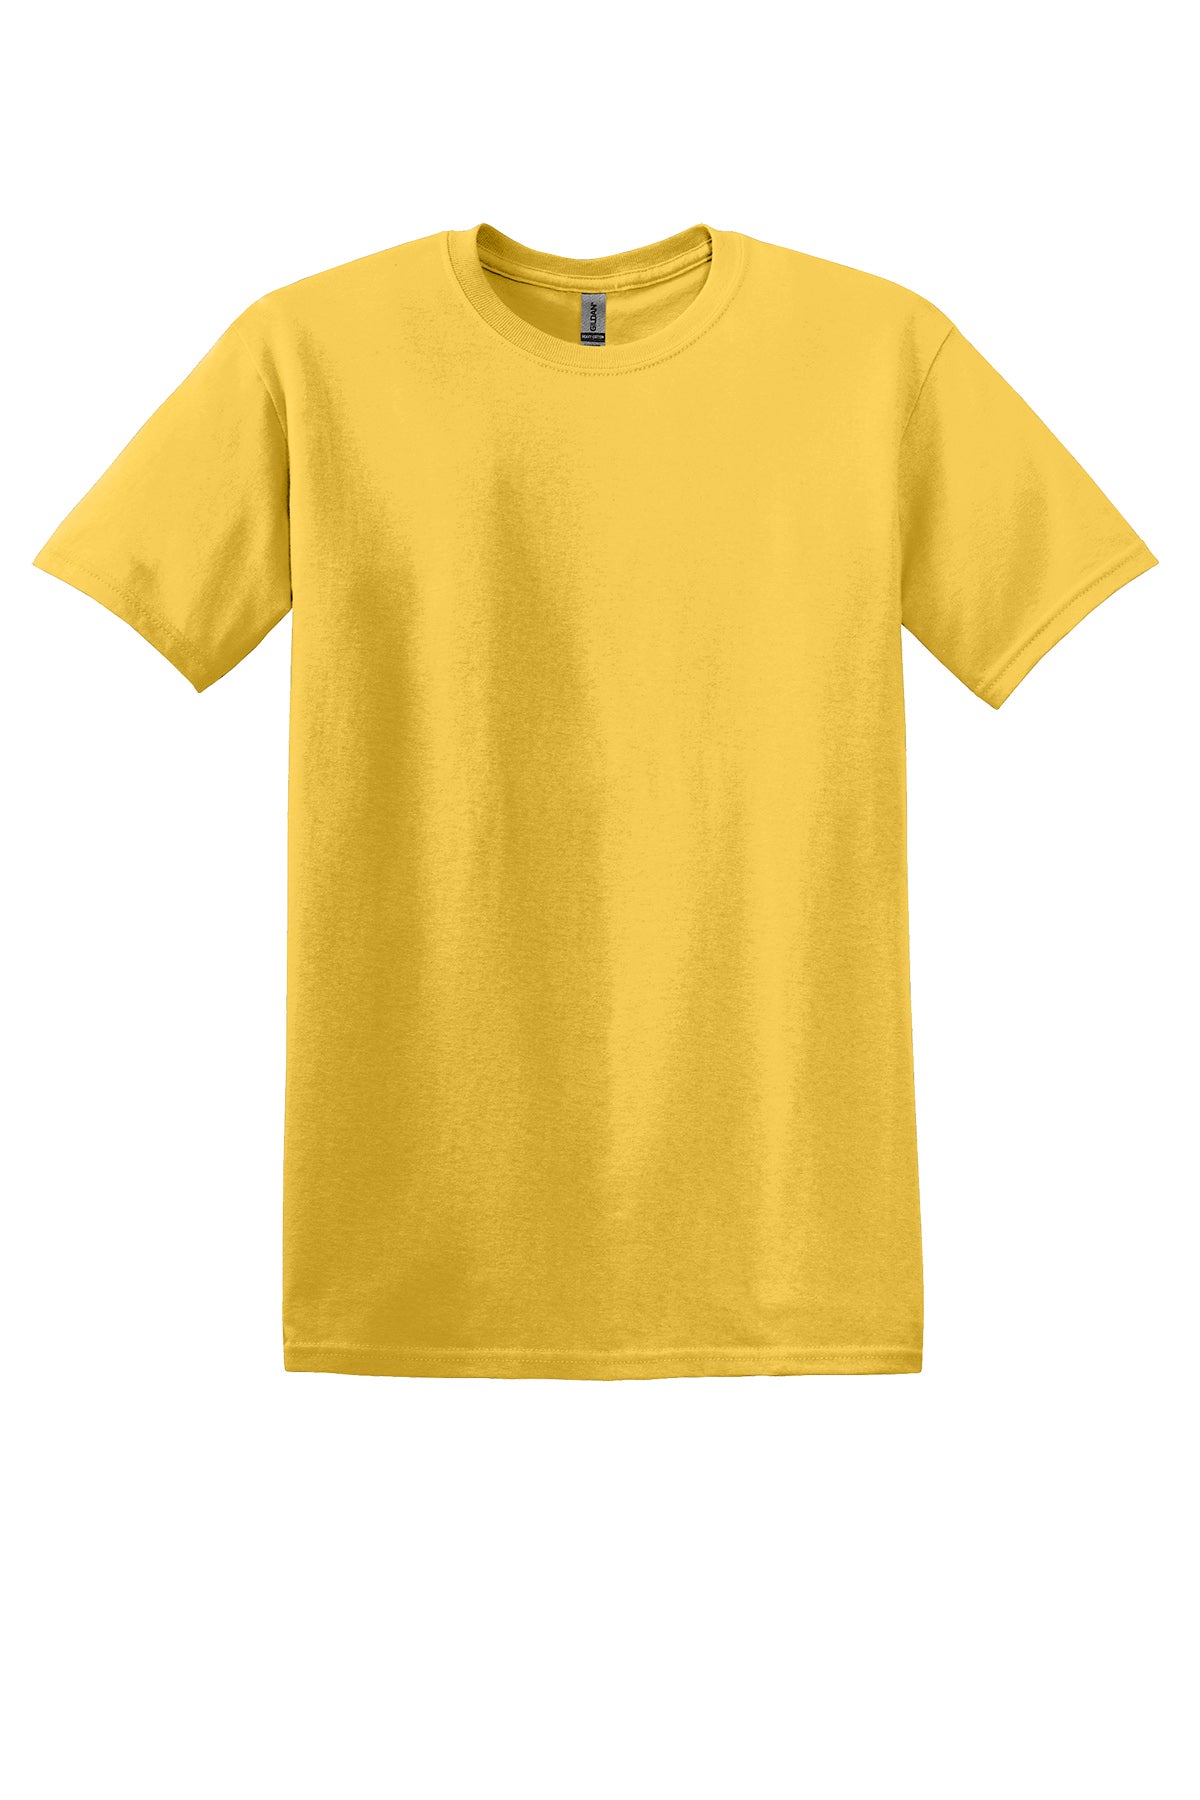 Gildan 64000 Adult T-Shirt Ad Small / Daisy